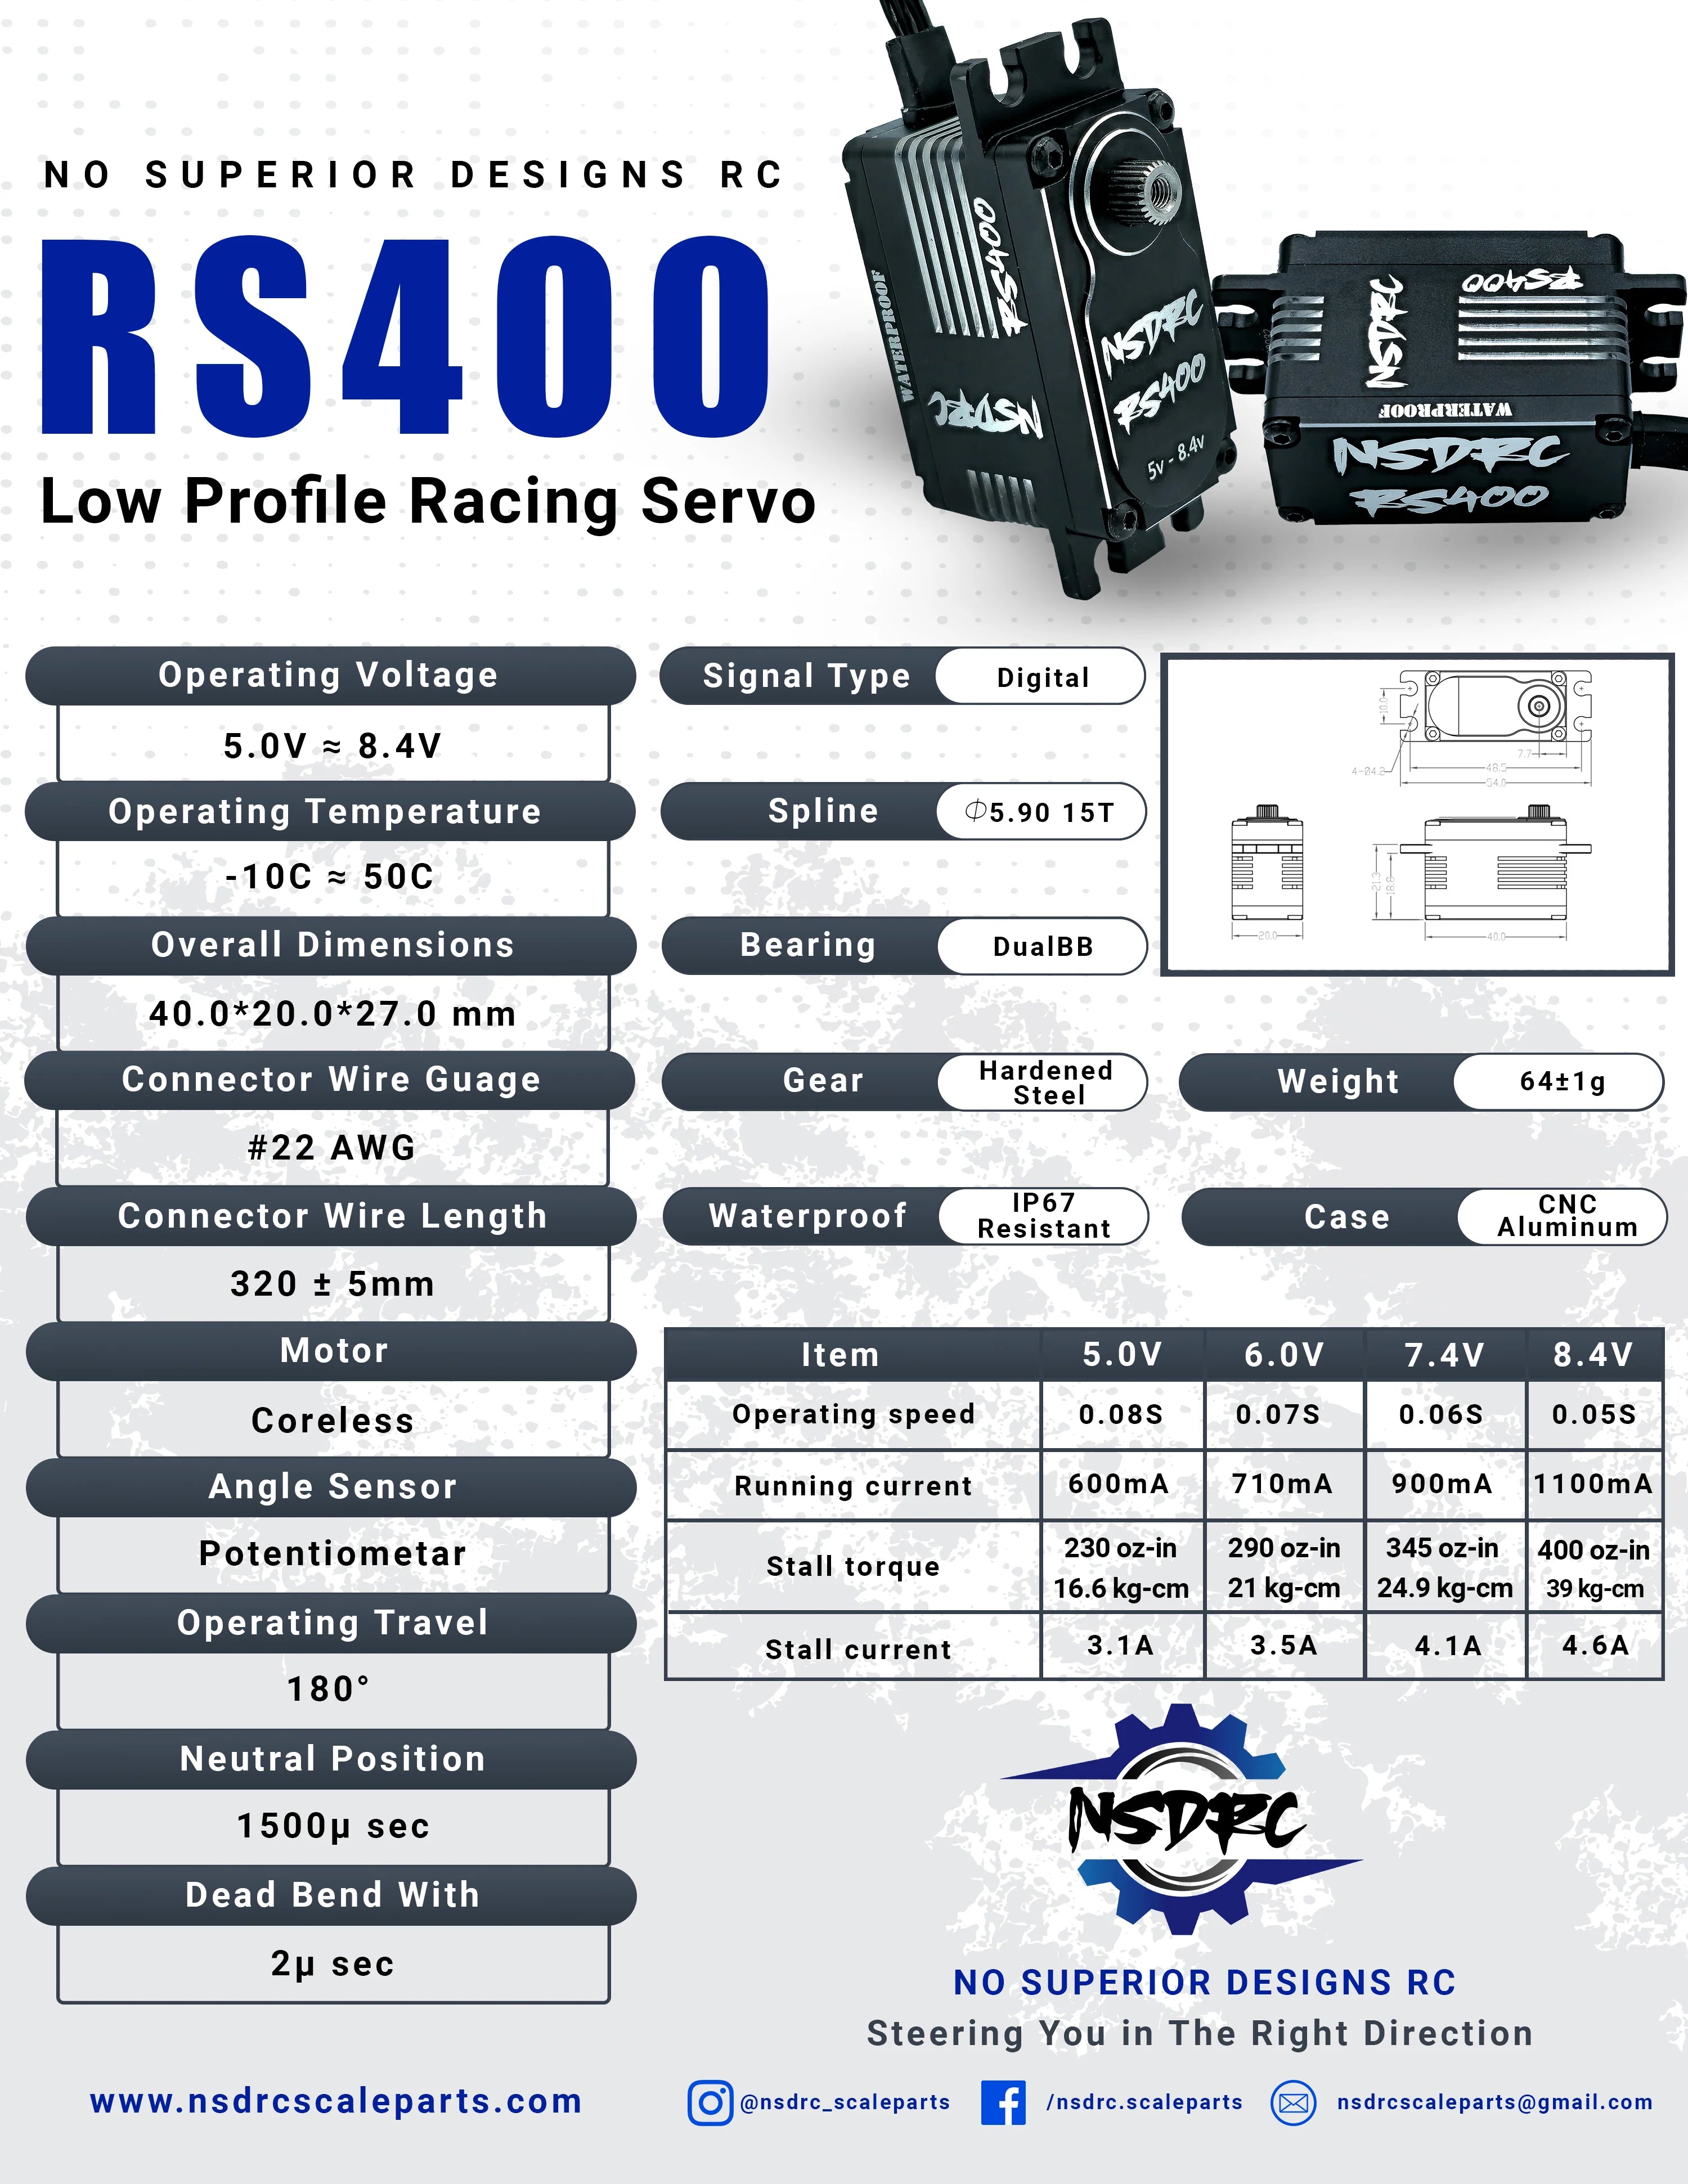 NEW NSDRC RS400 LOW PROFILE RACING SERVO